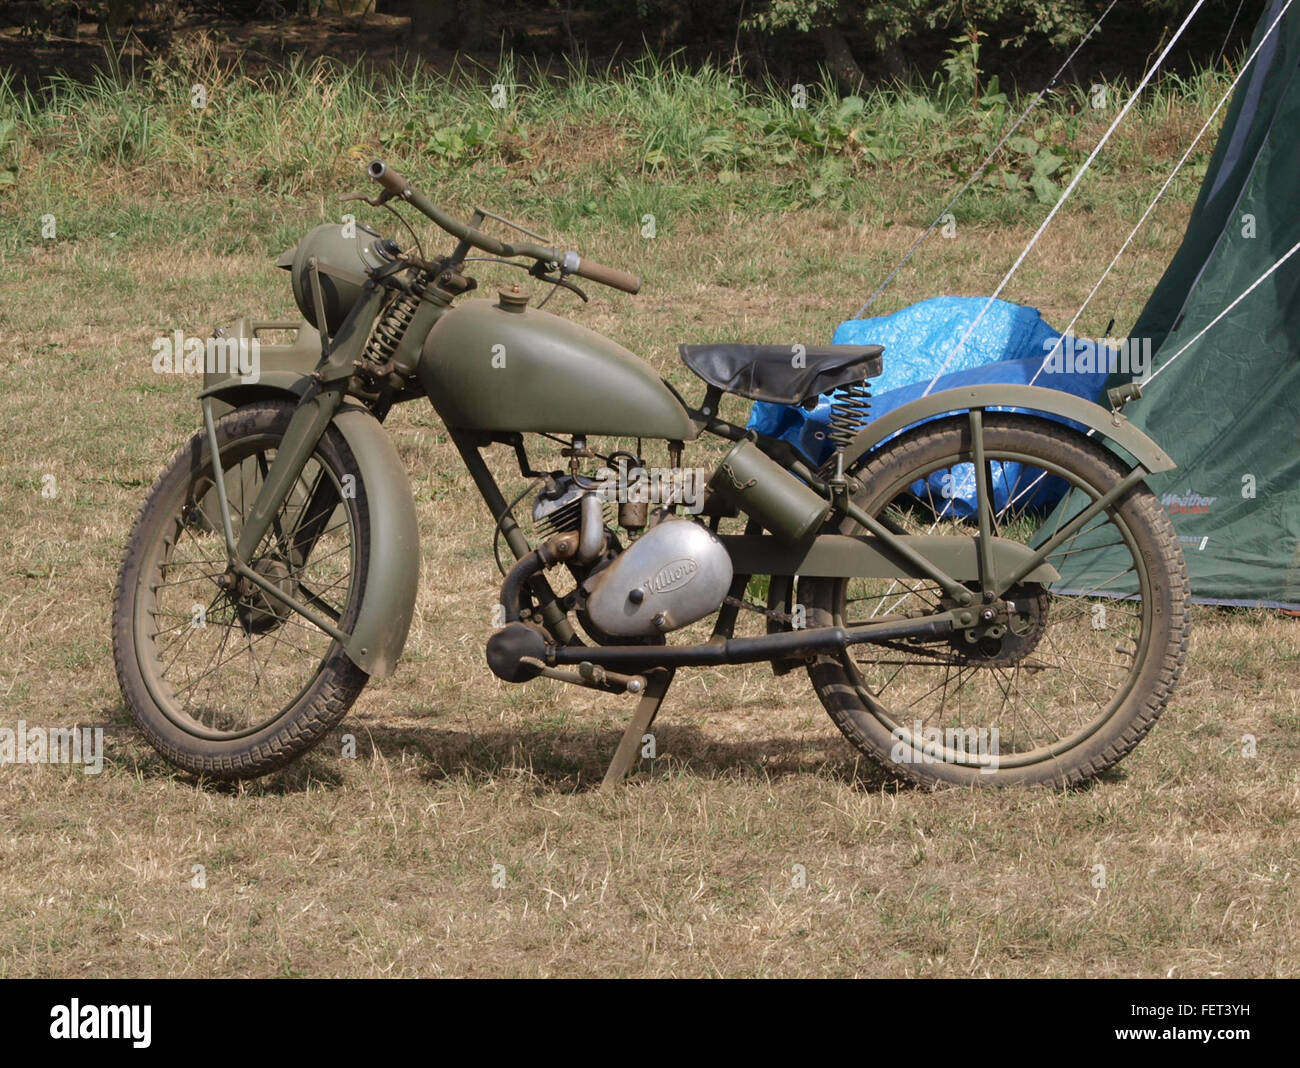 Villers moto militaire Photo Stock - Alamy